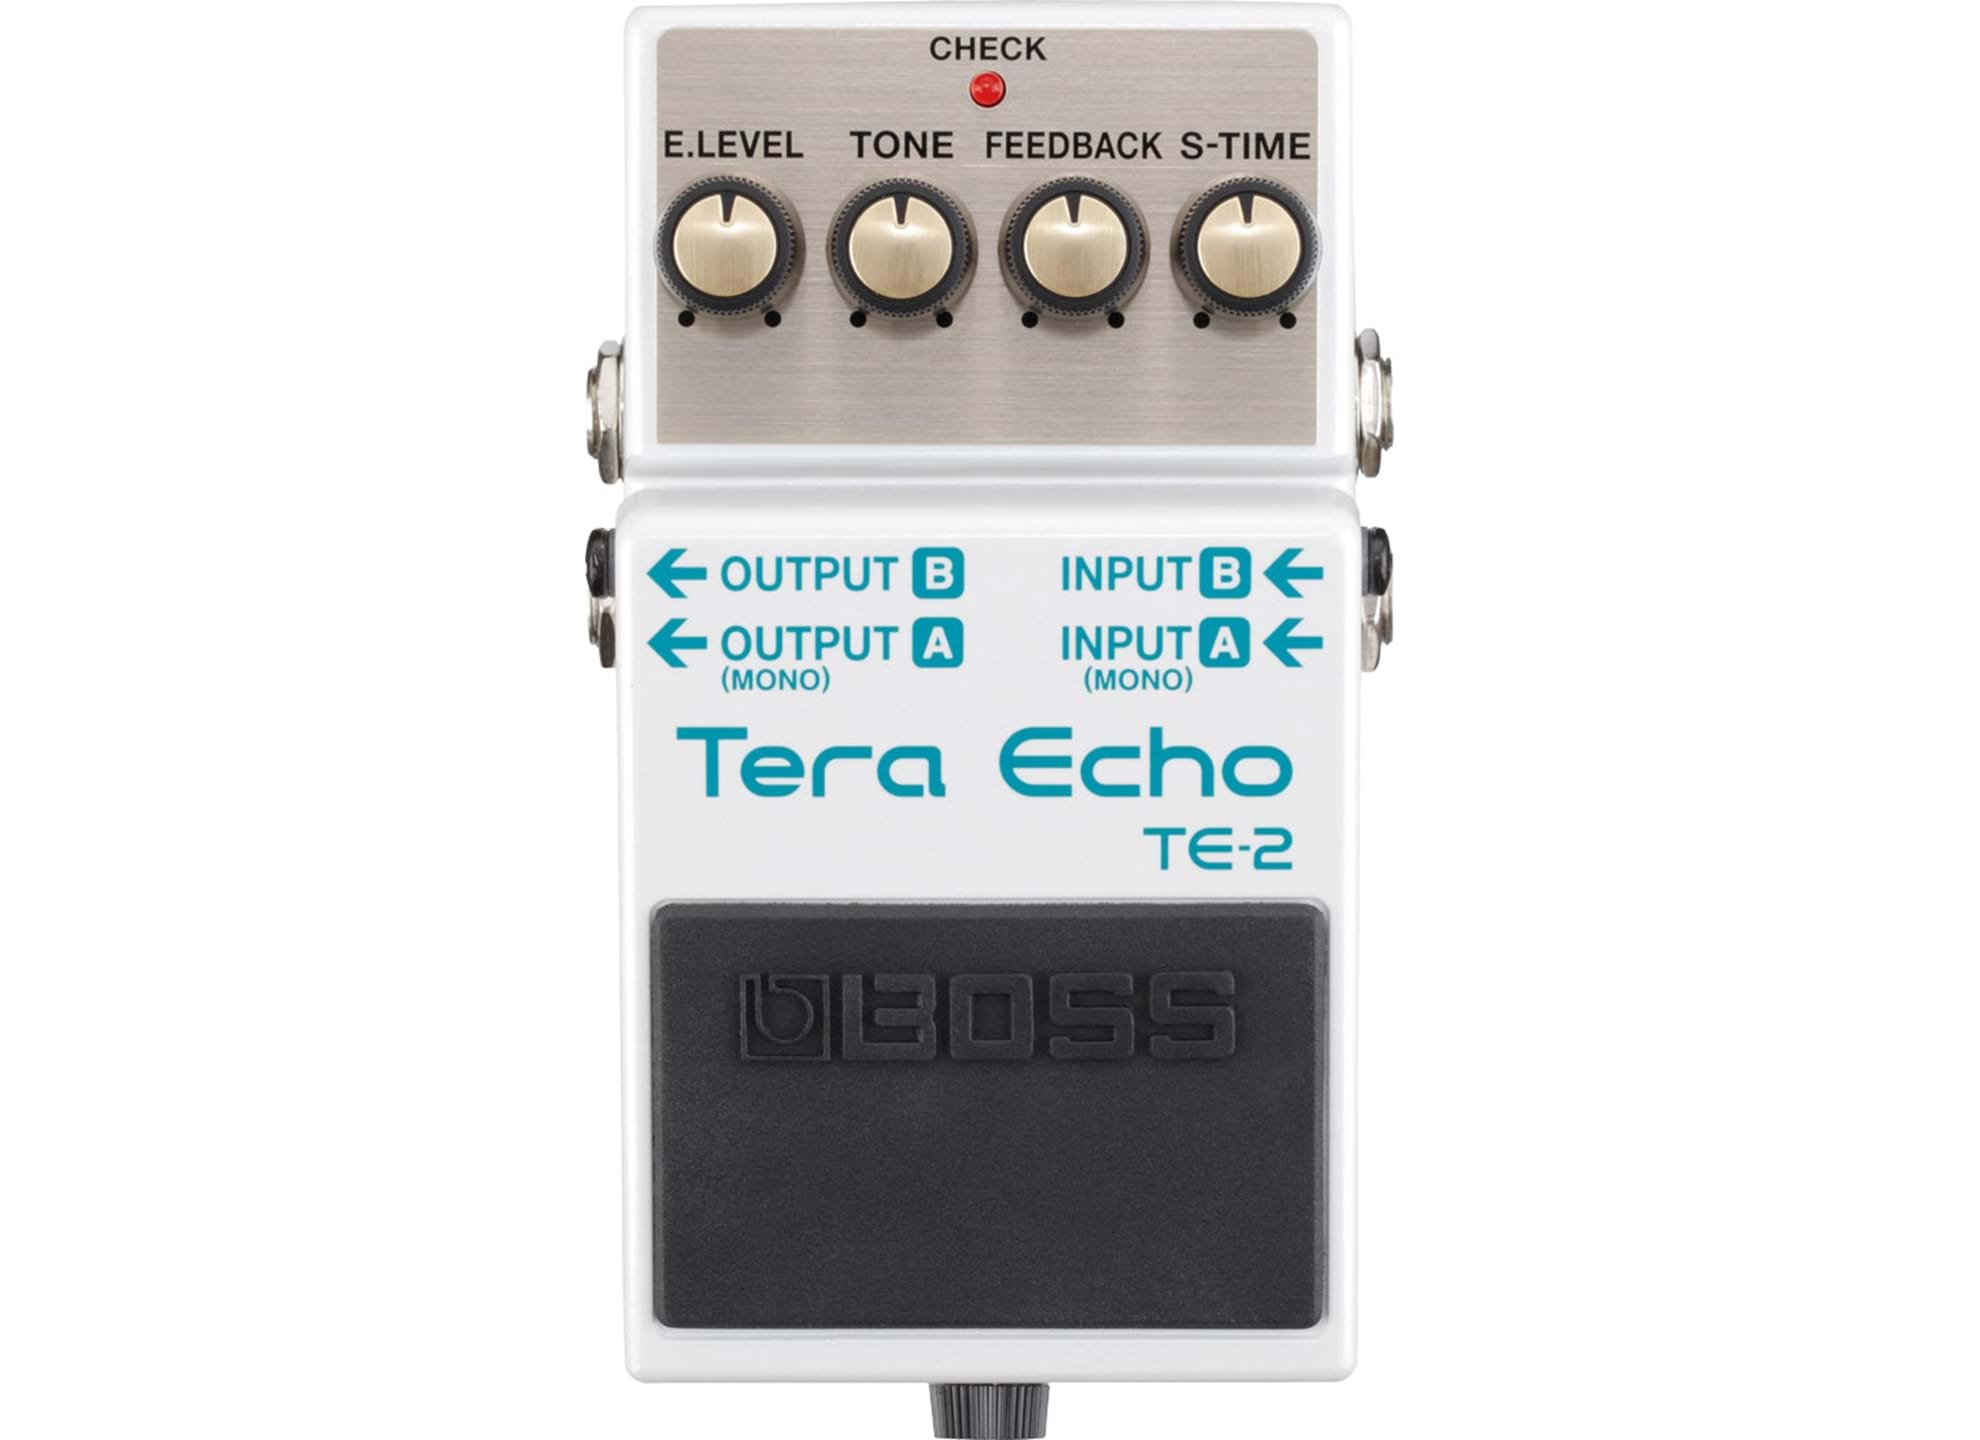 TE-2 Tera Echo